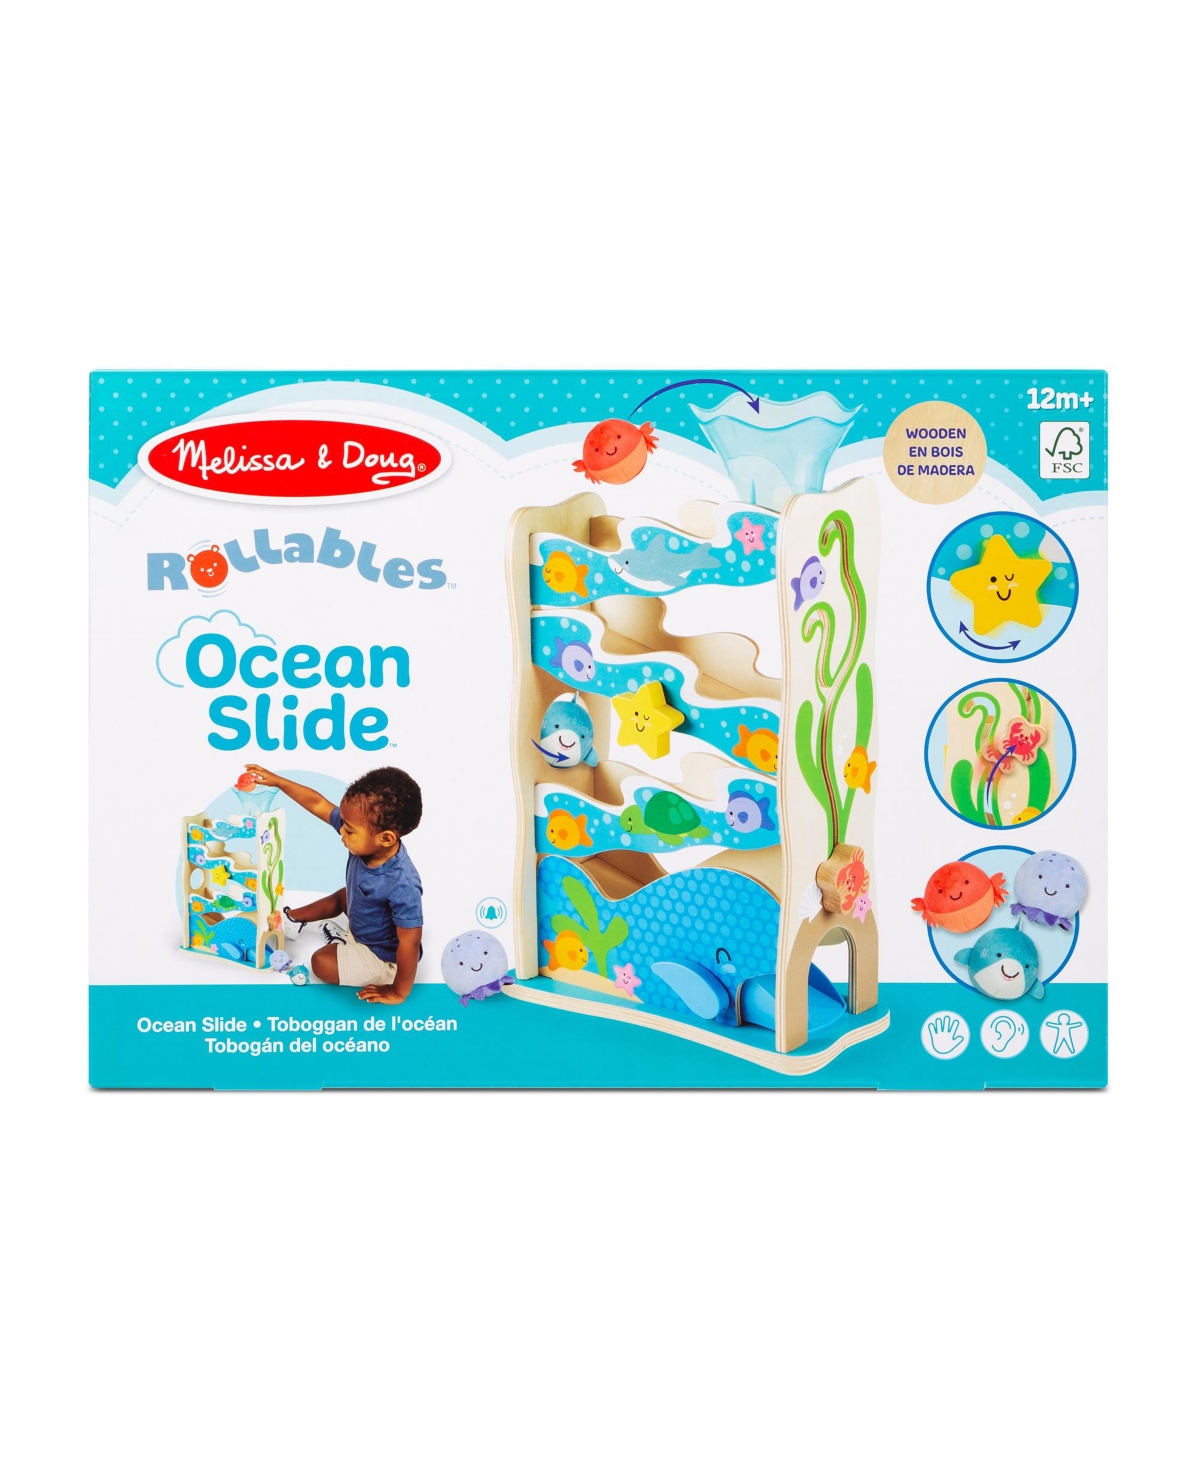 Shop Melissa & Doug Rollables Wooden Ocean Slide Infant And Toddler Toy 4 Piece Set In Multi